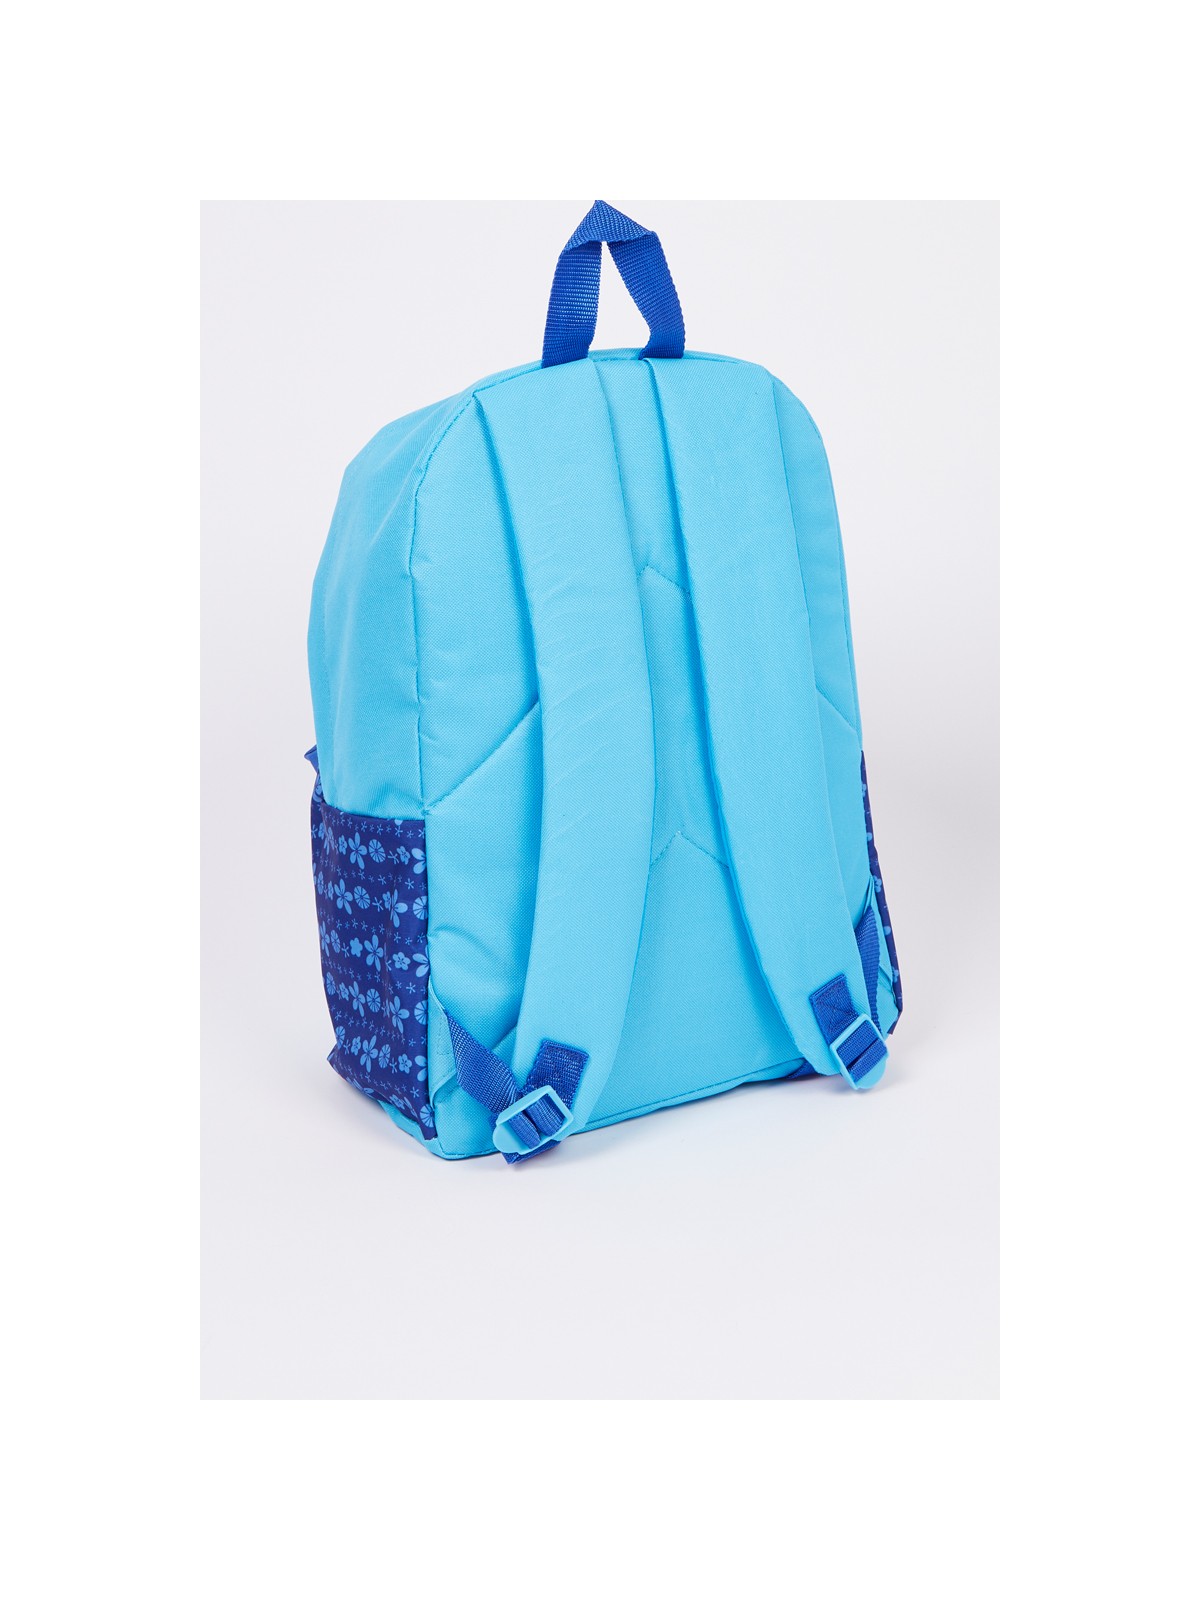 Lilo & Stitch Backpack